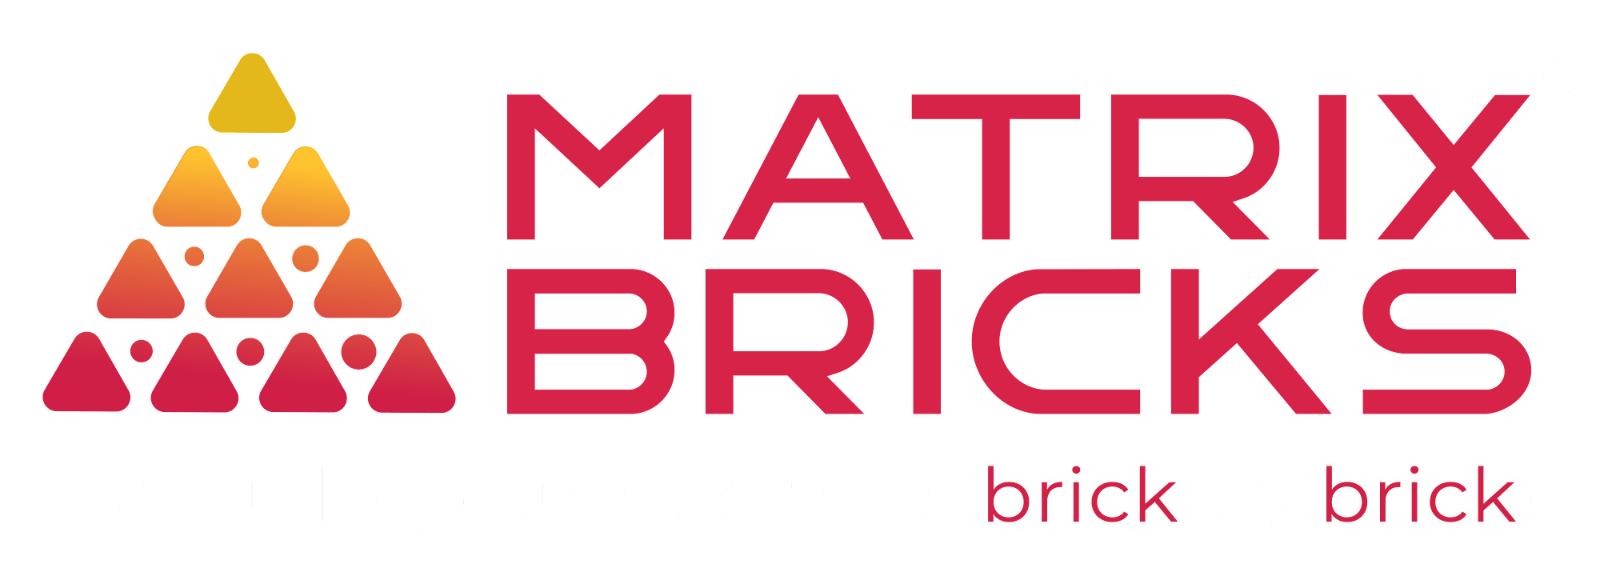 Brand Management Companies in Mumbai: Achieve Excellence with Matrix Bricks